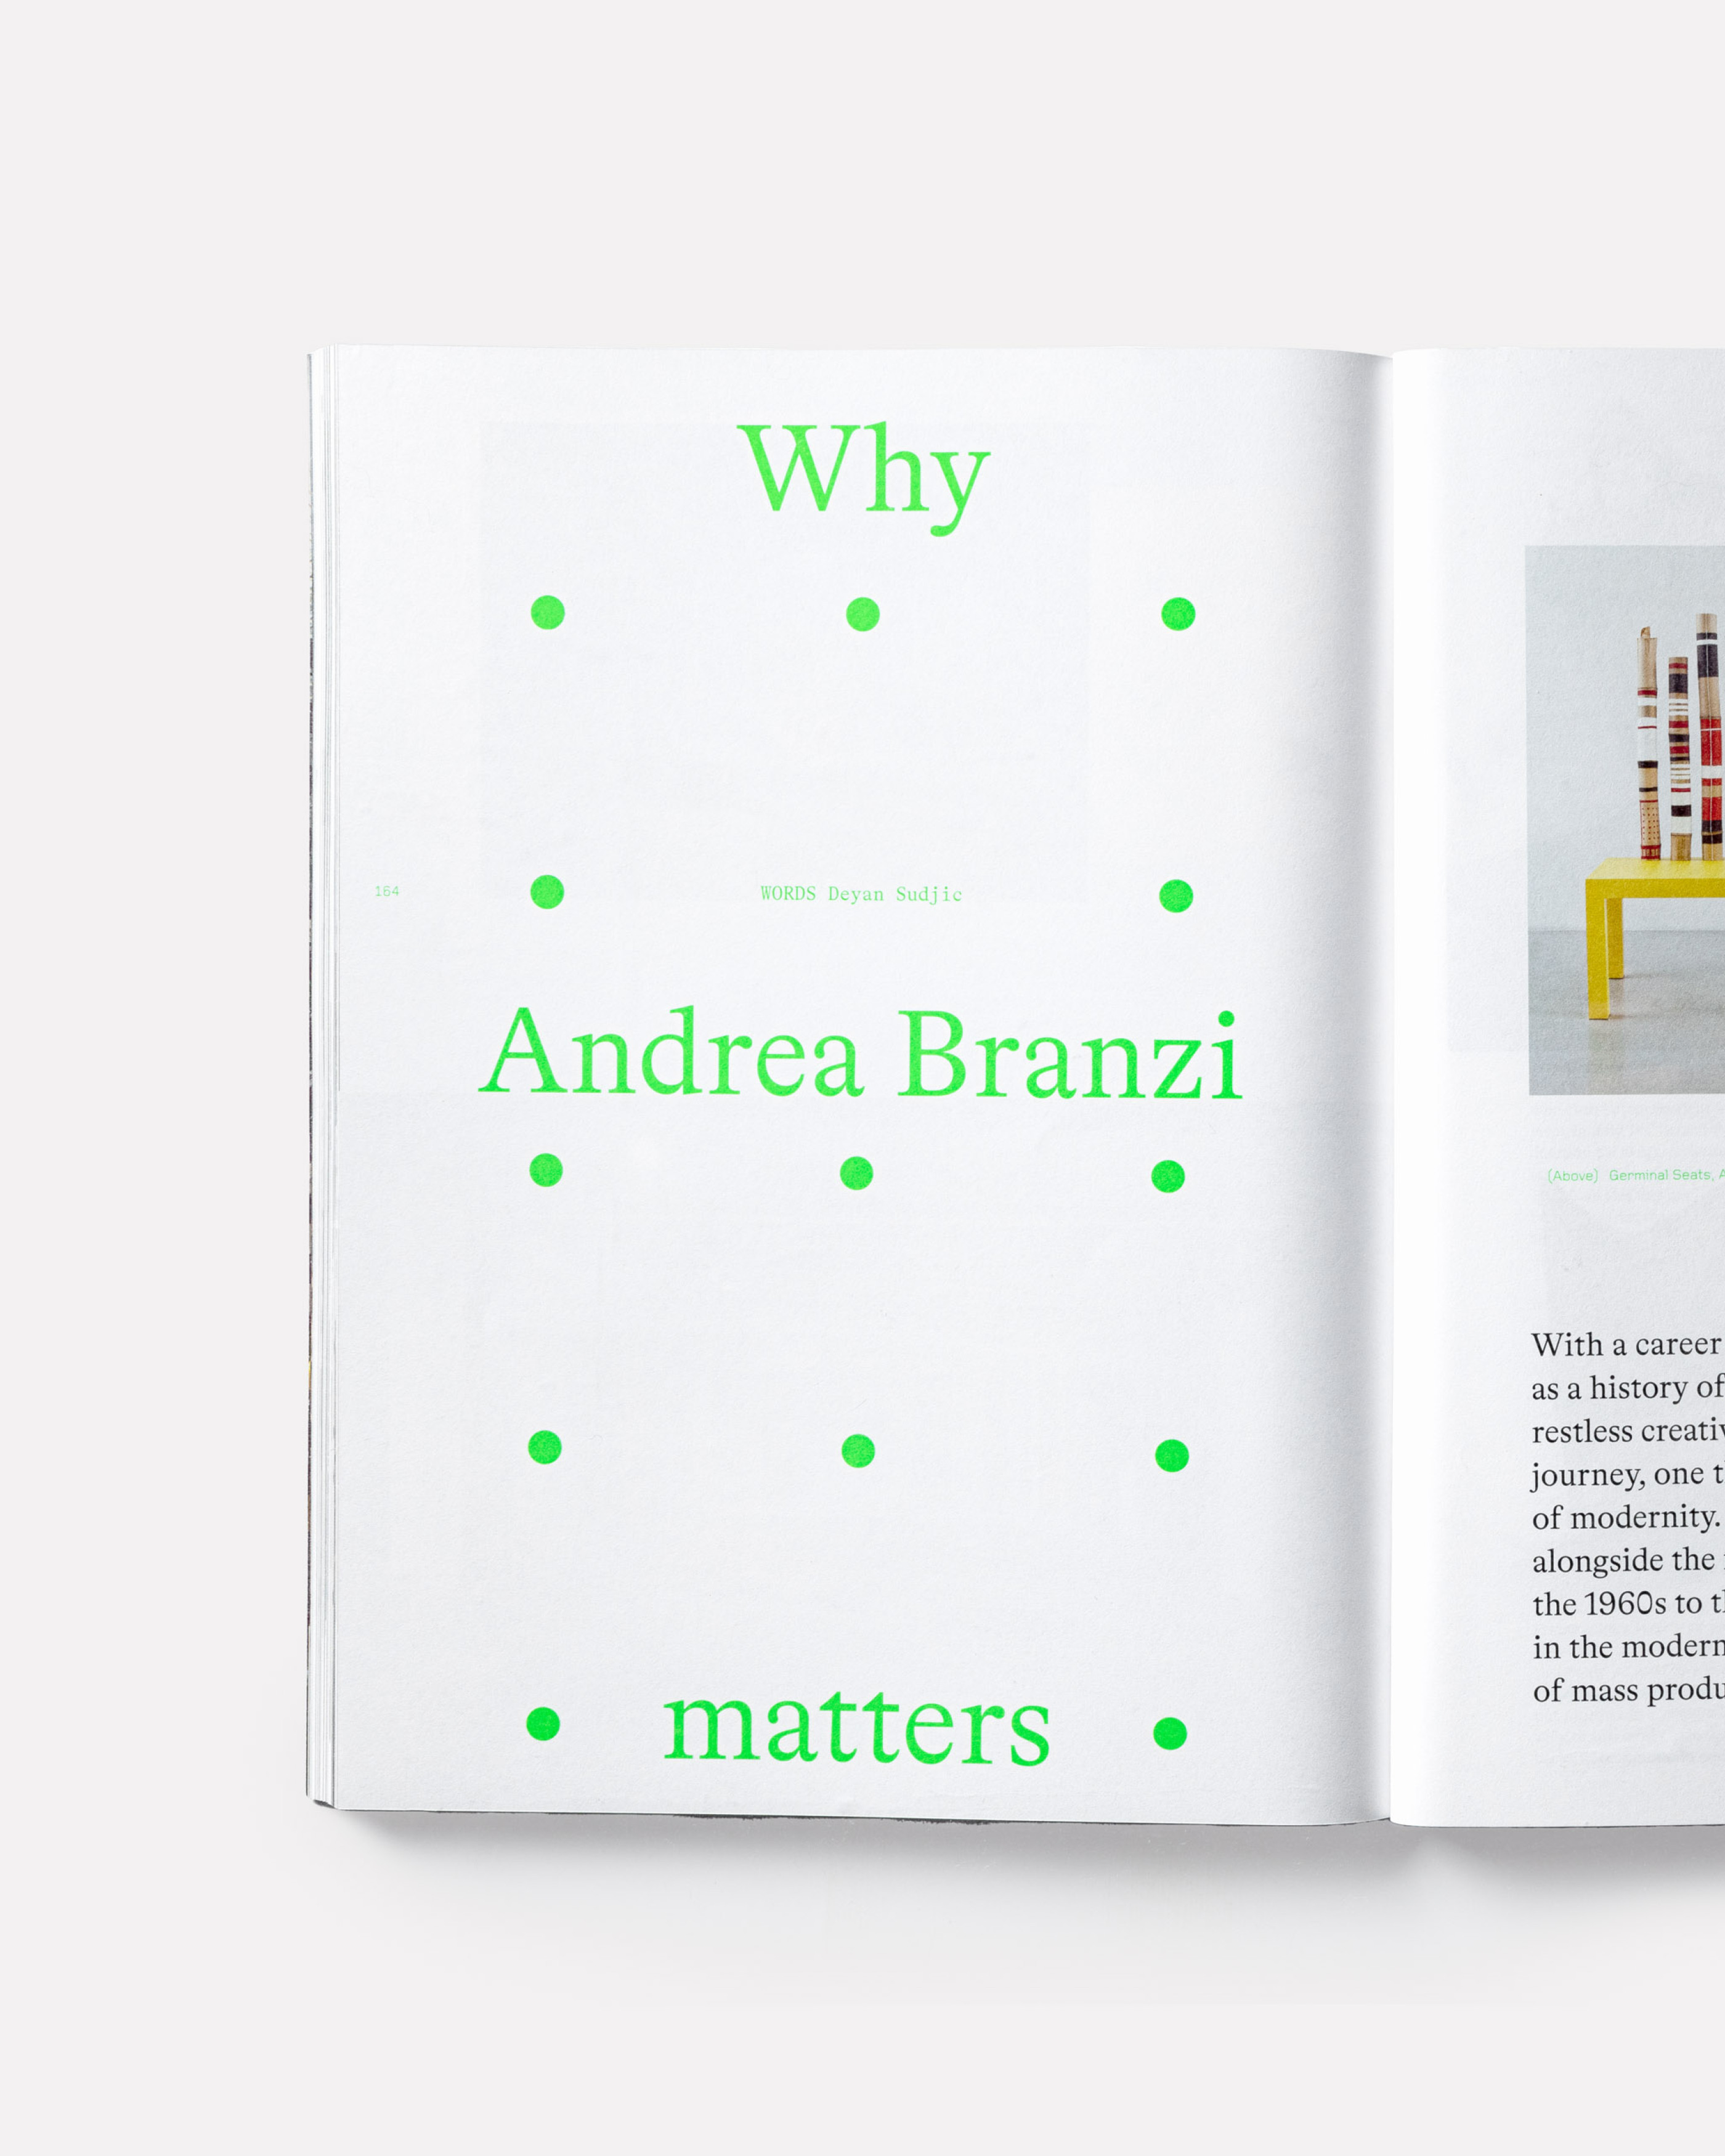 Inside spread of Anima magazine featuring Andrea Branzi on white background.